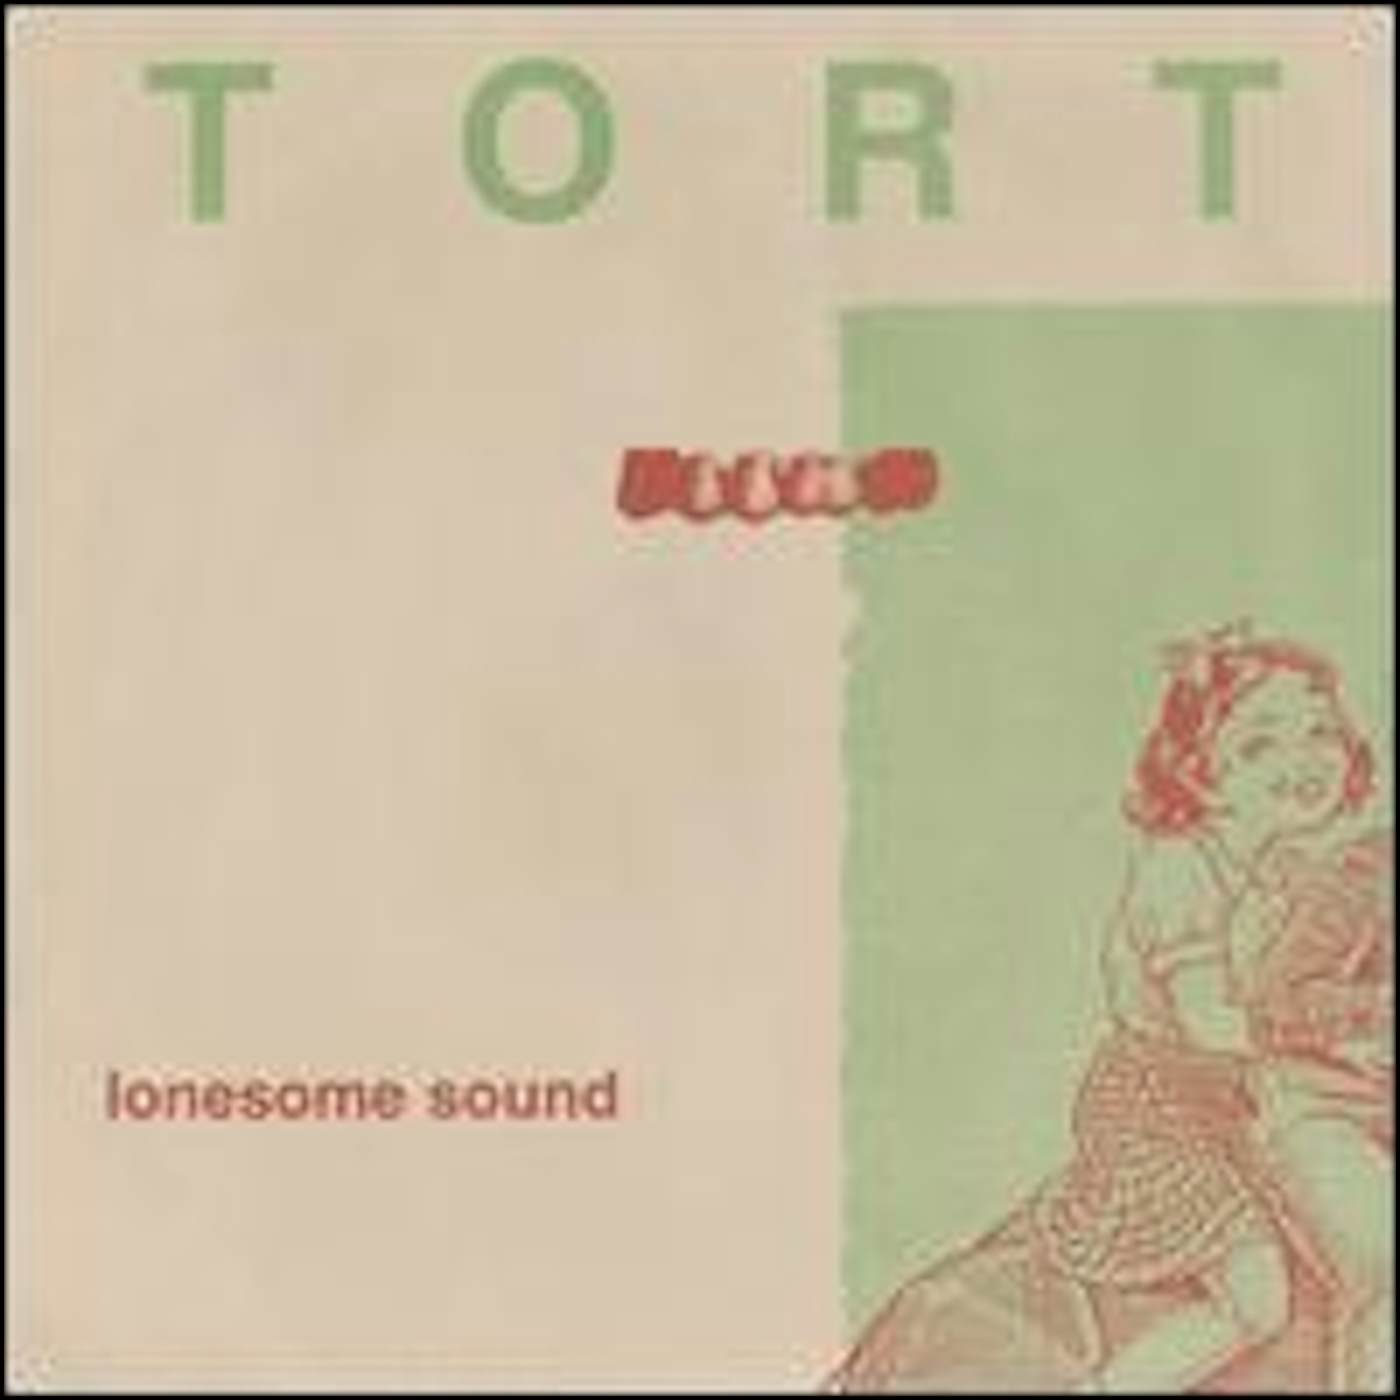 Tortoise LONESOME SOUND & MOSQUITO (CAN) (Vinyl)